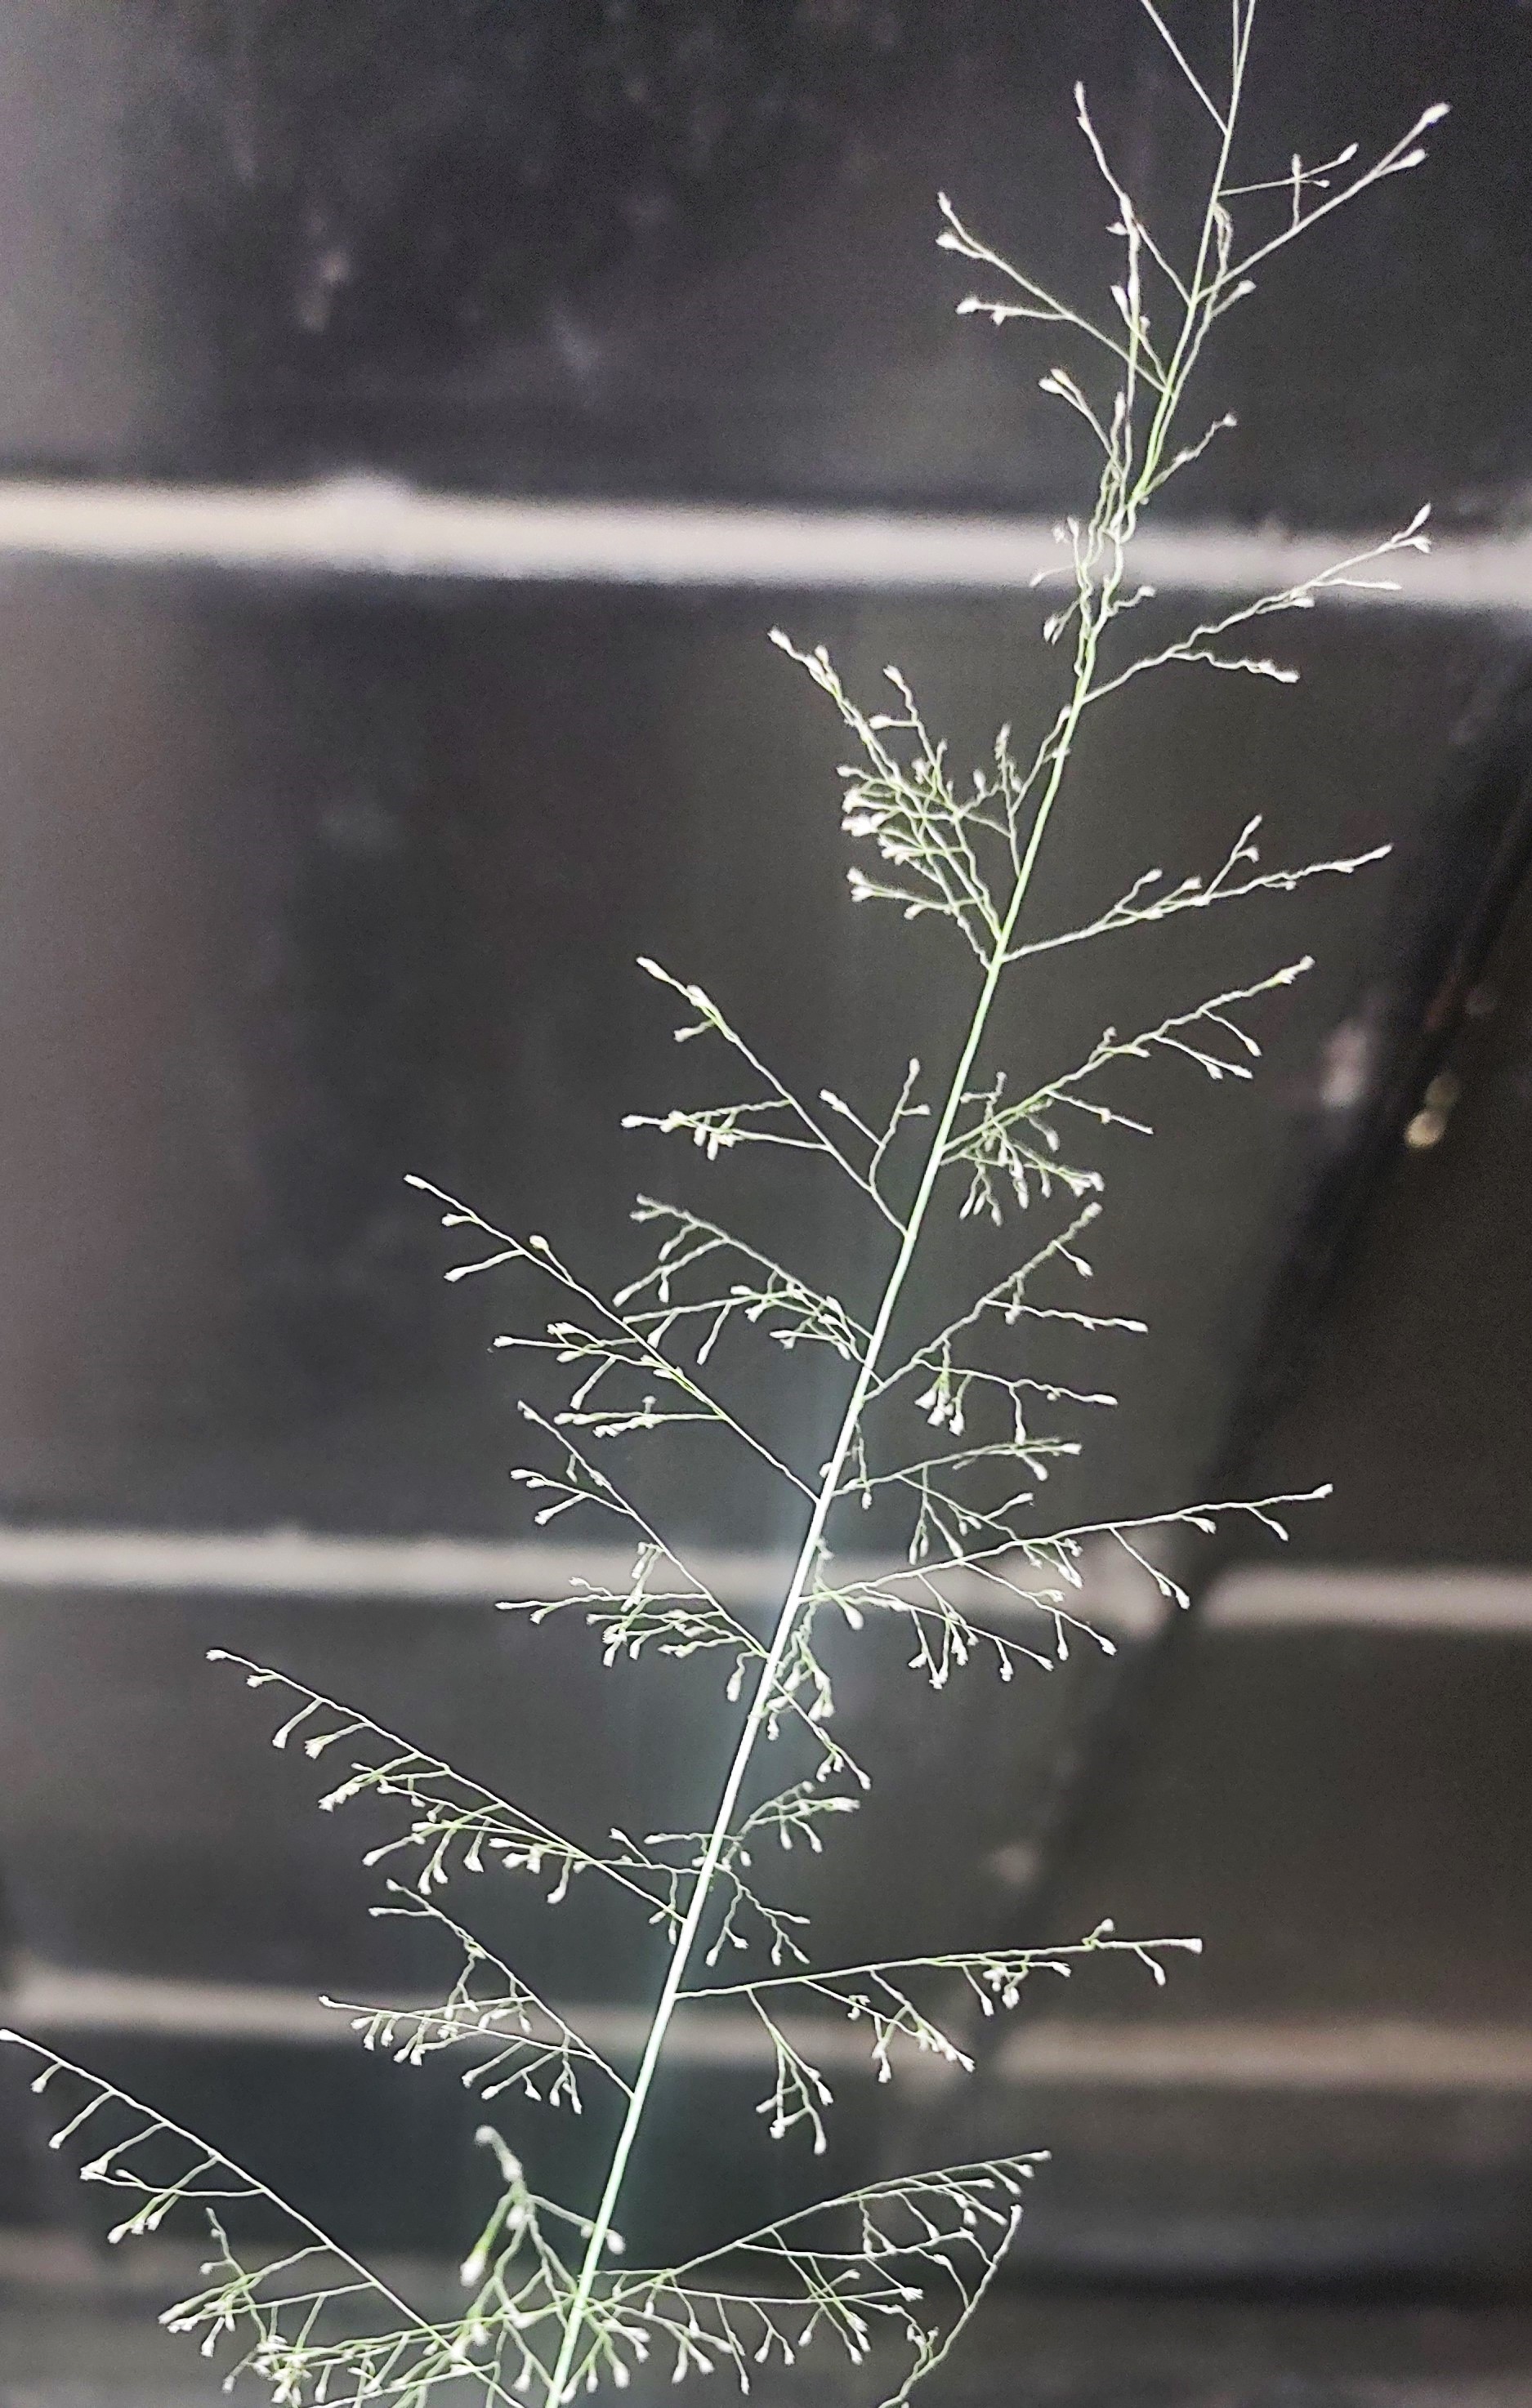 Grass Floret seen through a compound microscope.